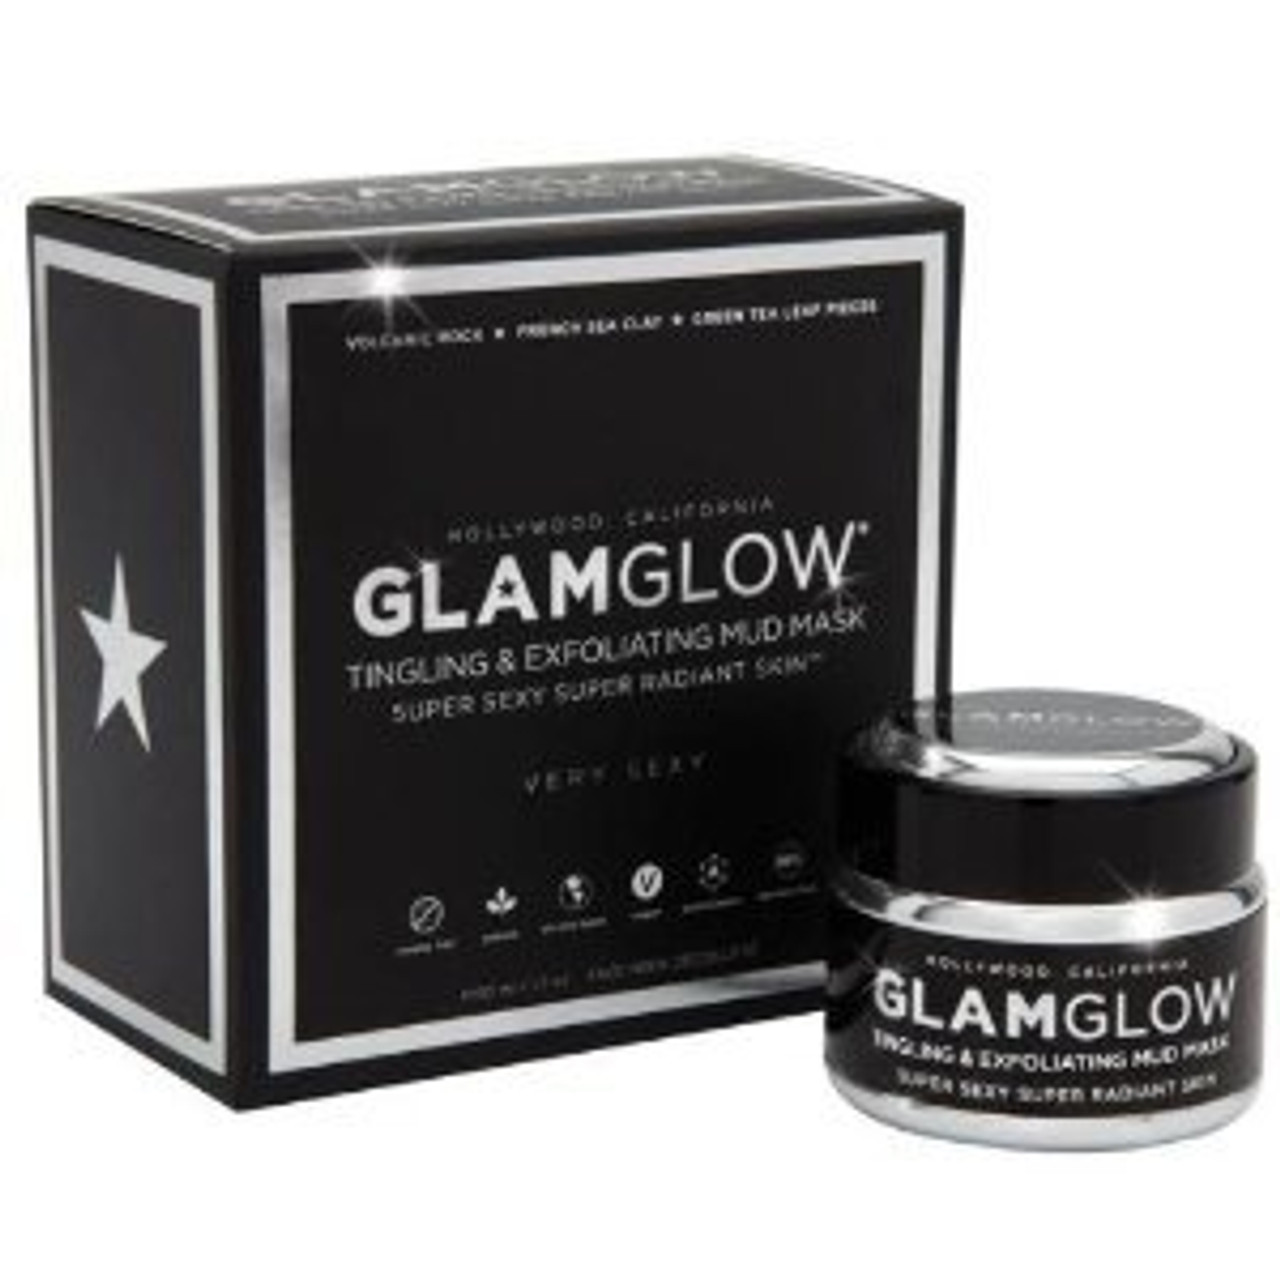 Glamglow Tingling & Exfoliating Mud Mask - .5 oz